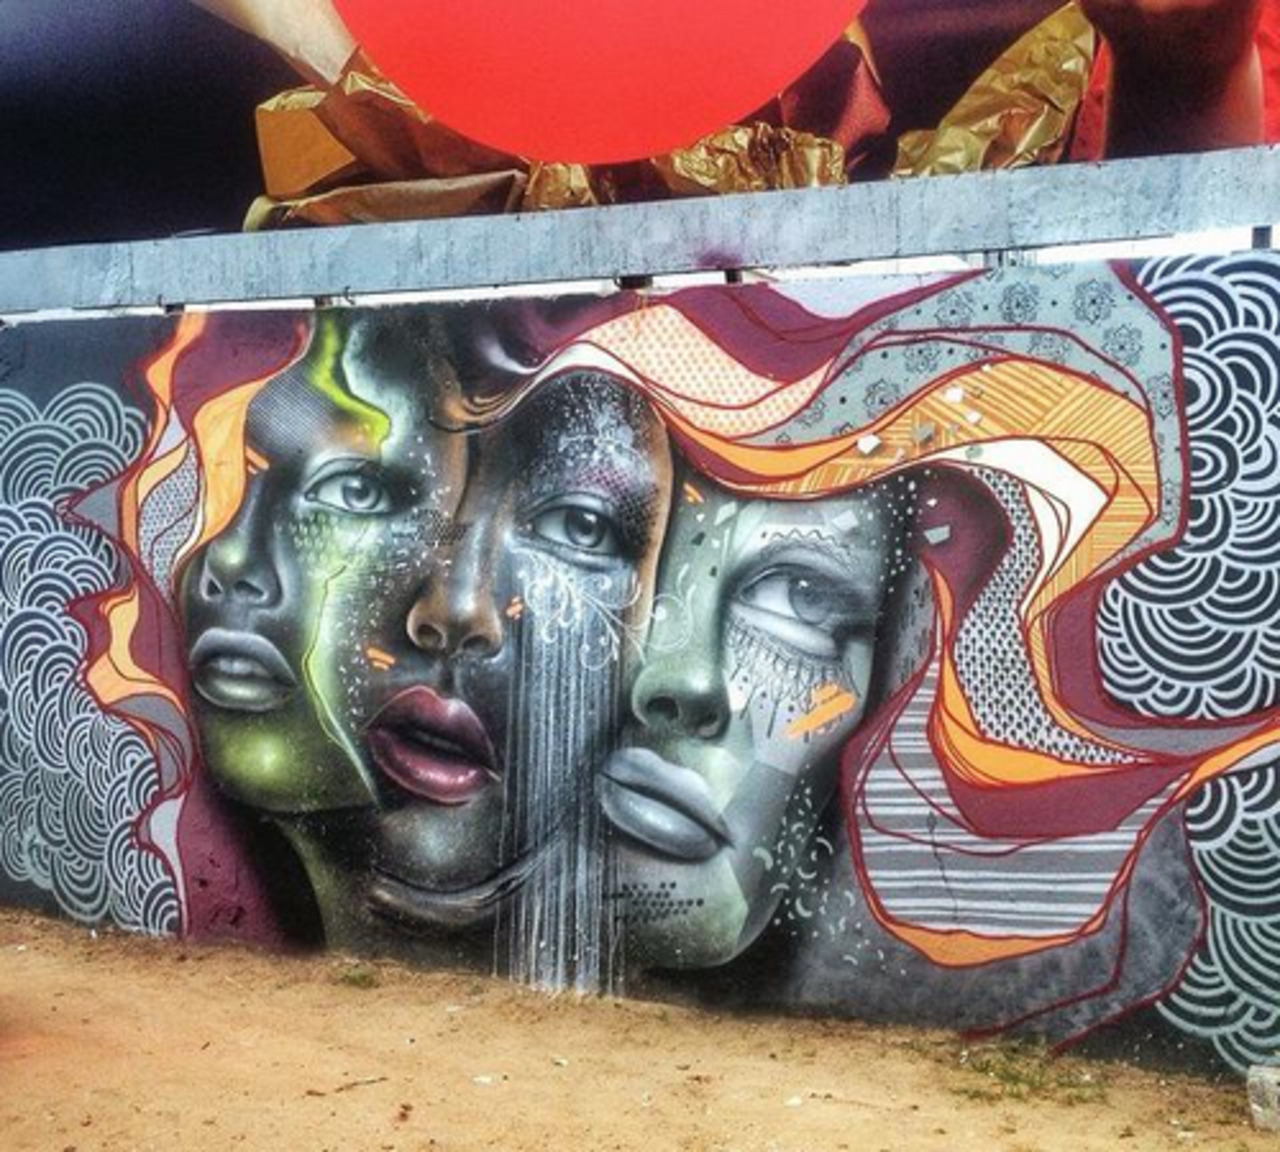 Amazing Street Art by AQI Luciano in Maceió, Brazil 
#art #arte #graffiti #streetart http://t.co/exg988hUSW